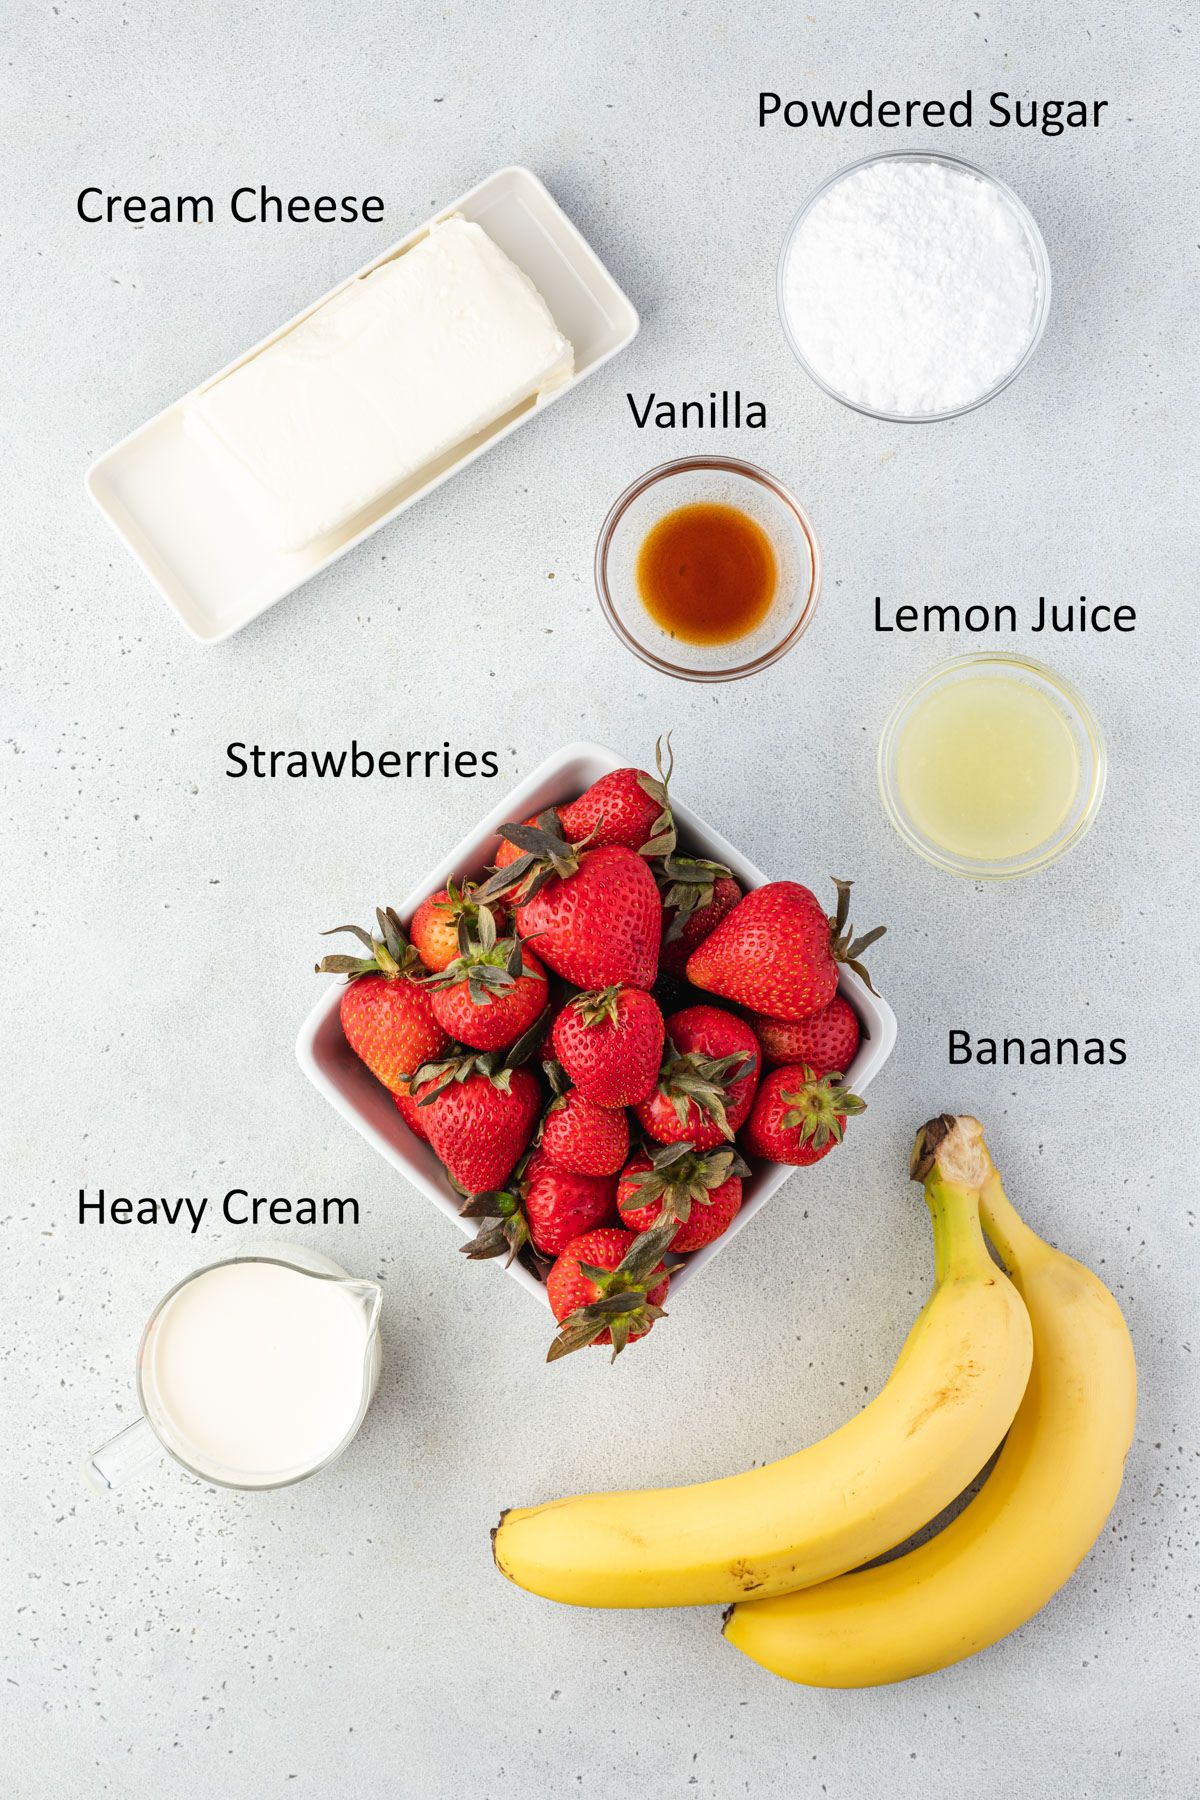 Ingredients for strawberry banana dessert.